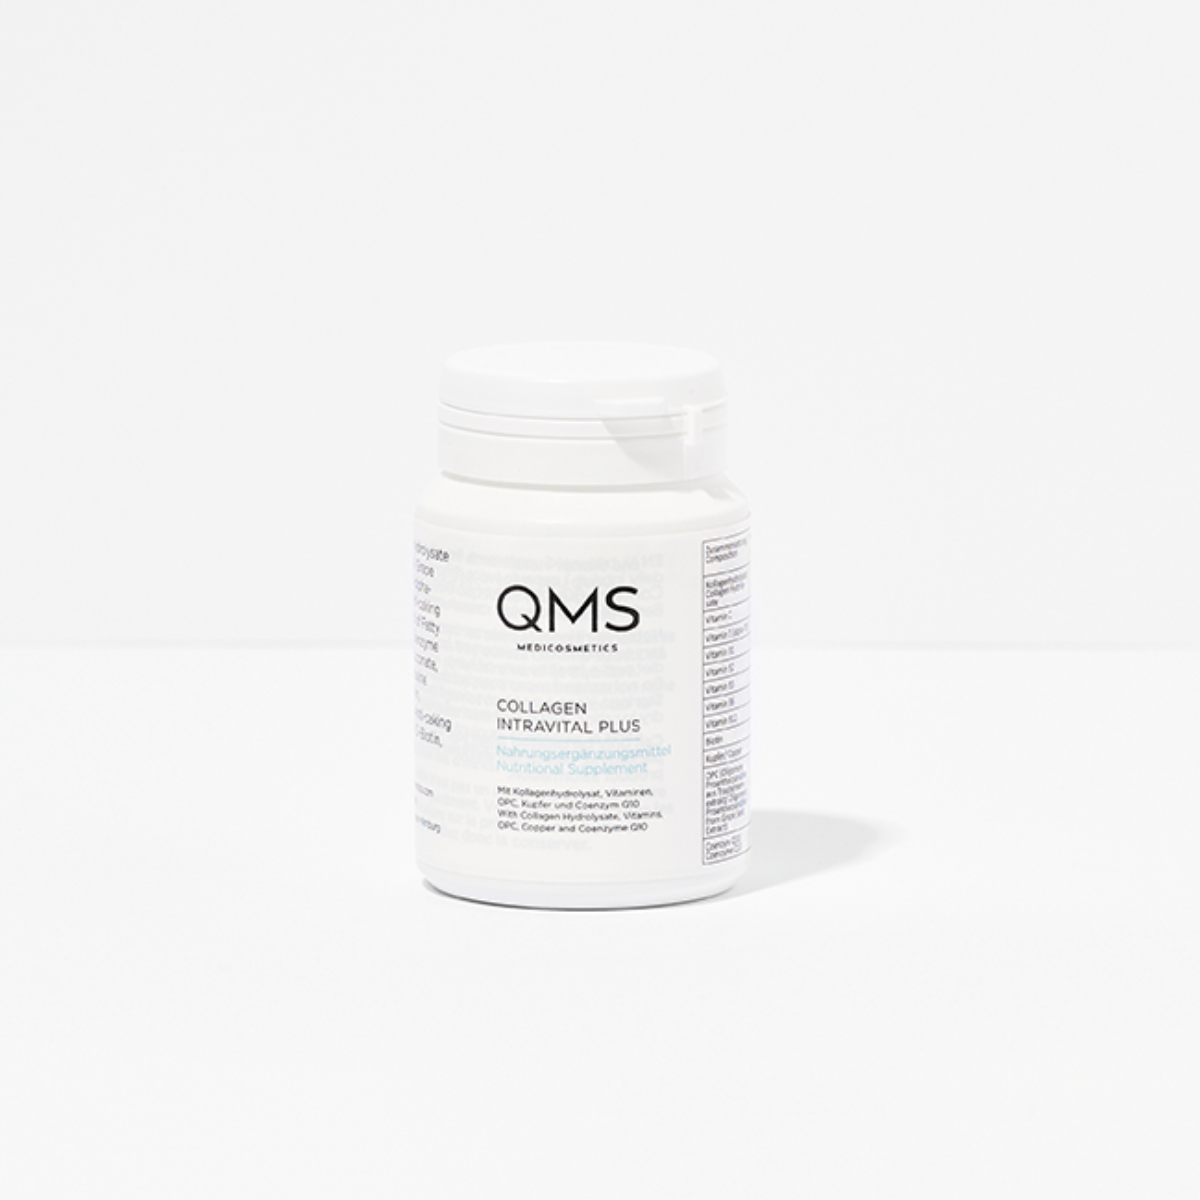 QMS Medicosmetics geriamos kolageno kapsulės/Collagen Intravital Plus 60 vnt.